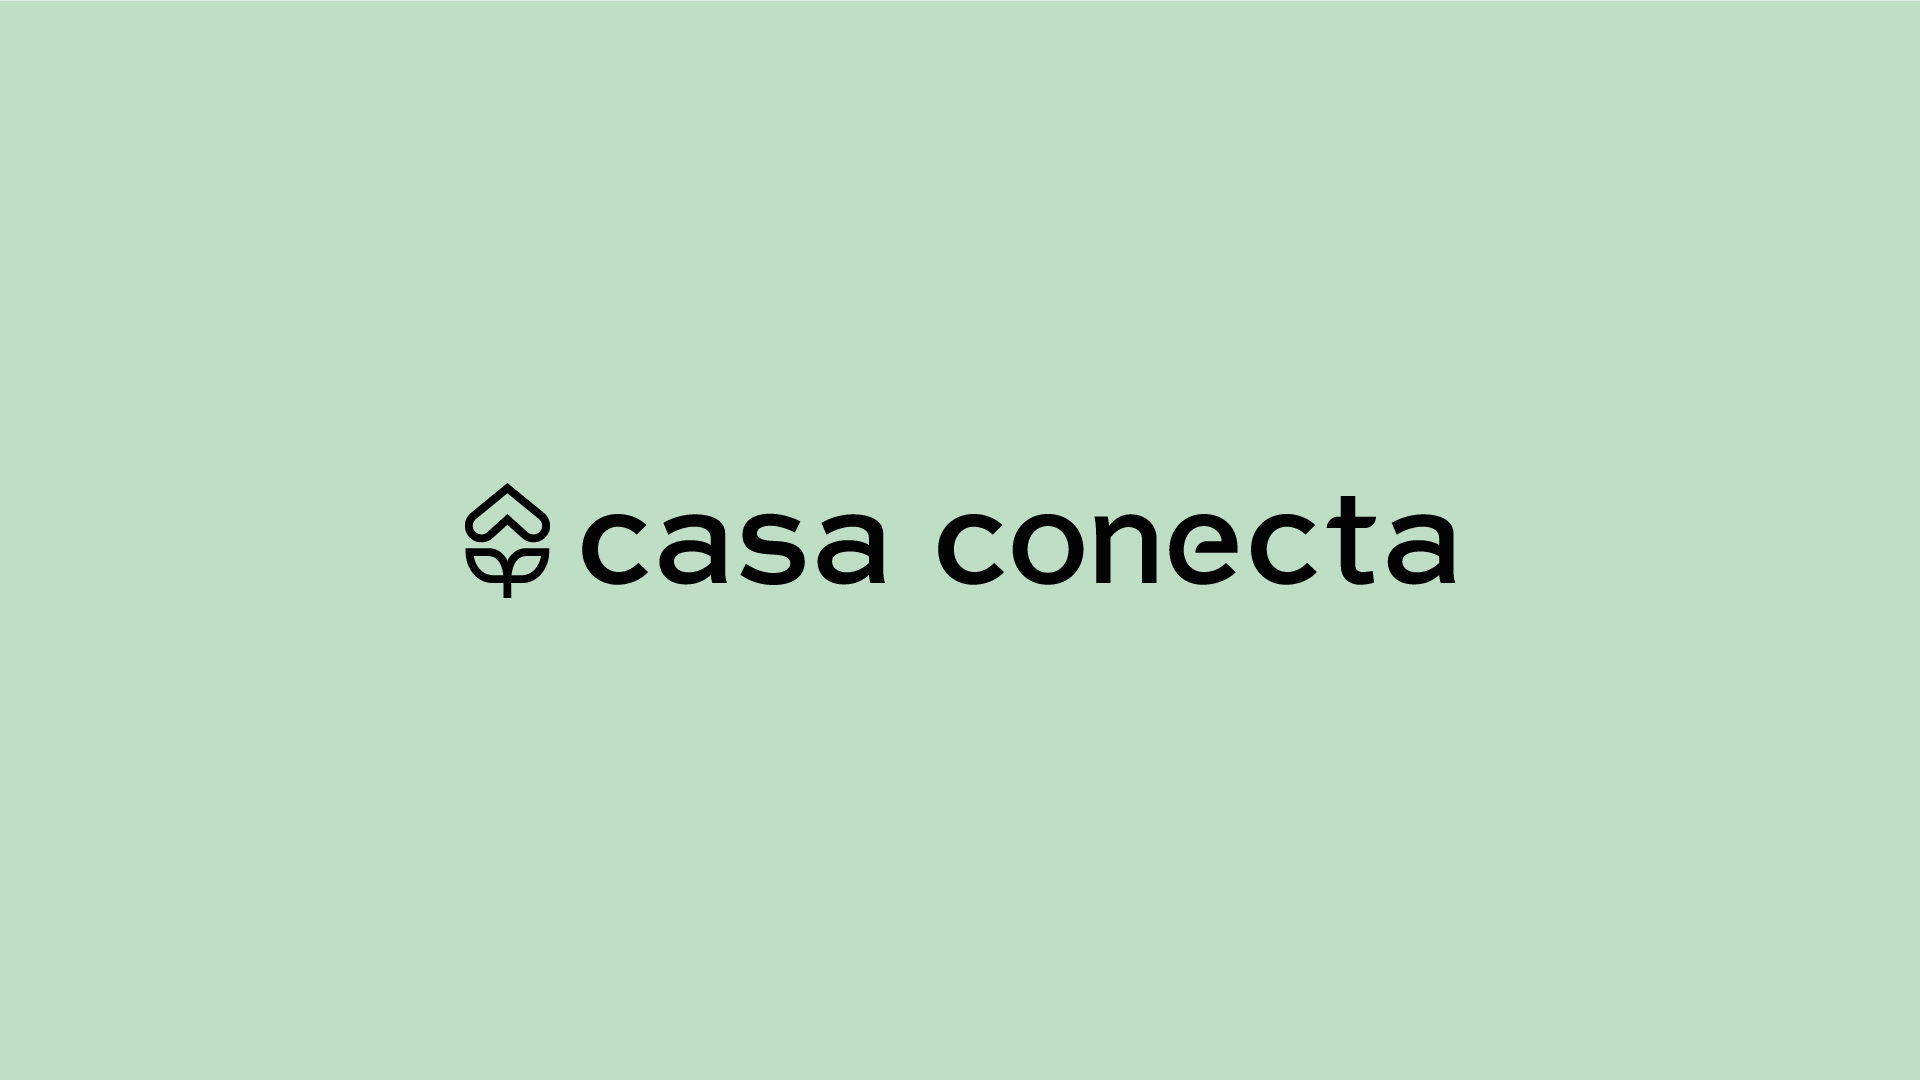 A Modern Visual Brand Identity for Casa Conecta by Diro Soares